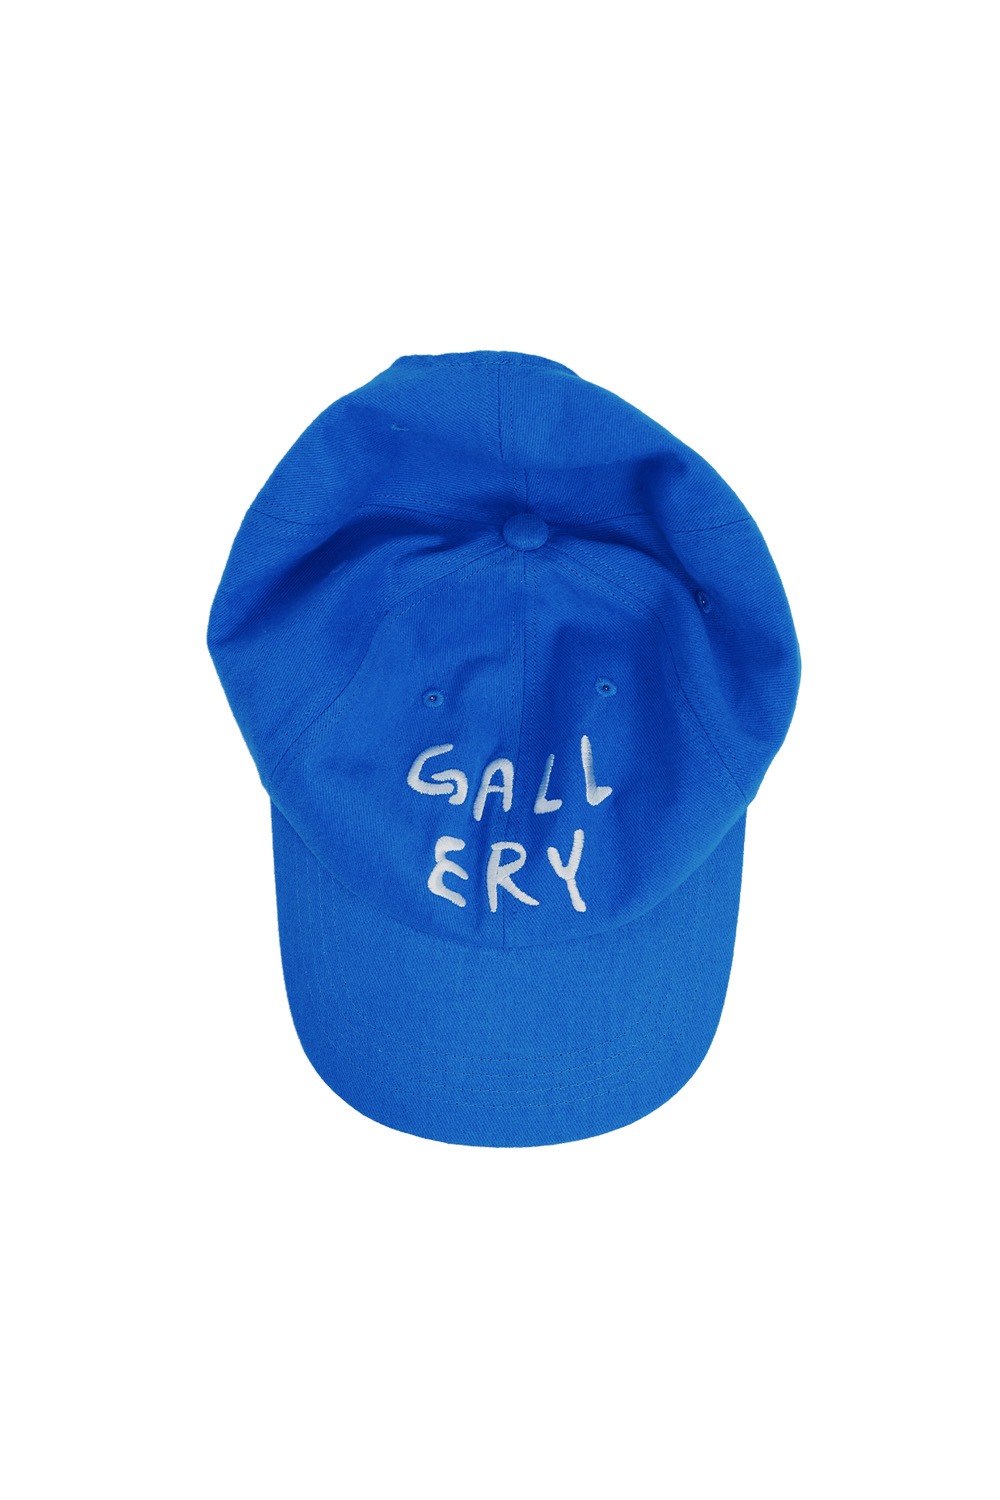 Gallery Logo Ball Cap - Blue